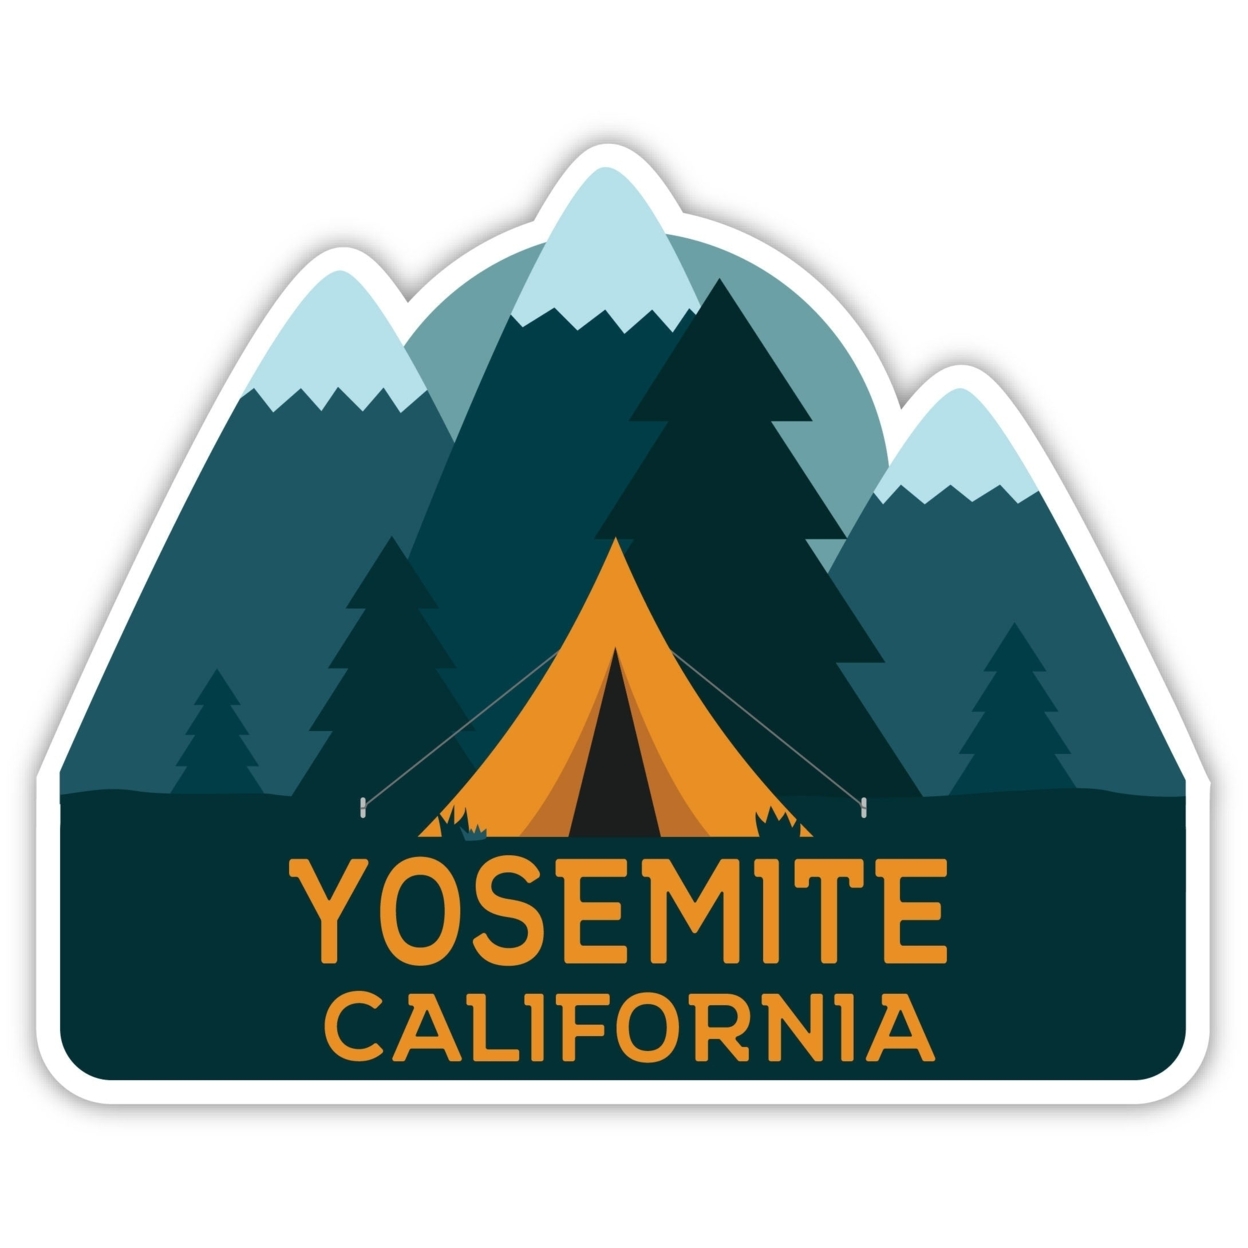 Yosemite California Souvenir Decorative Stickers (Choose Theme And Size) - Single Unit, 4-Inch, Adventures Awaits